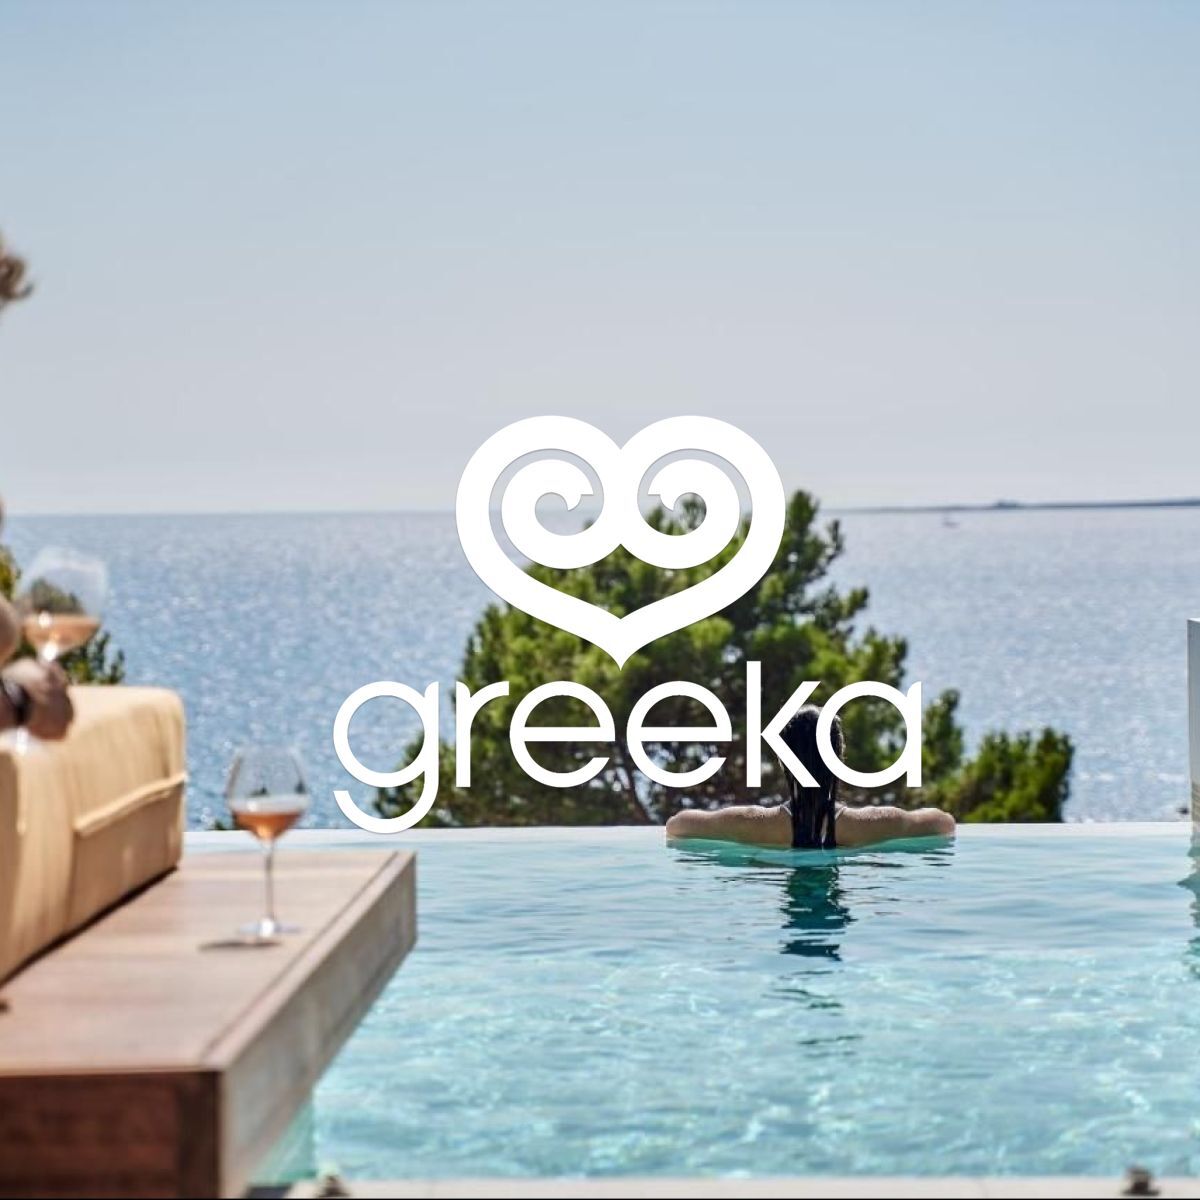 WHITE ROCKS HOTEL KEFALONIA $179 ($̶1̶9̶4̶) - Prices & Reviews -  Greece/Ionian Islands